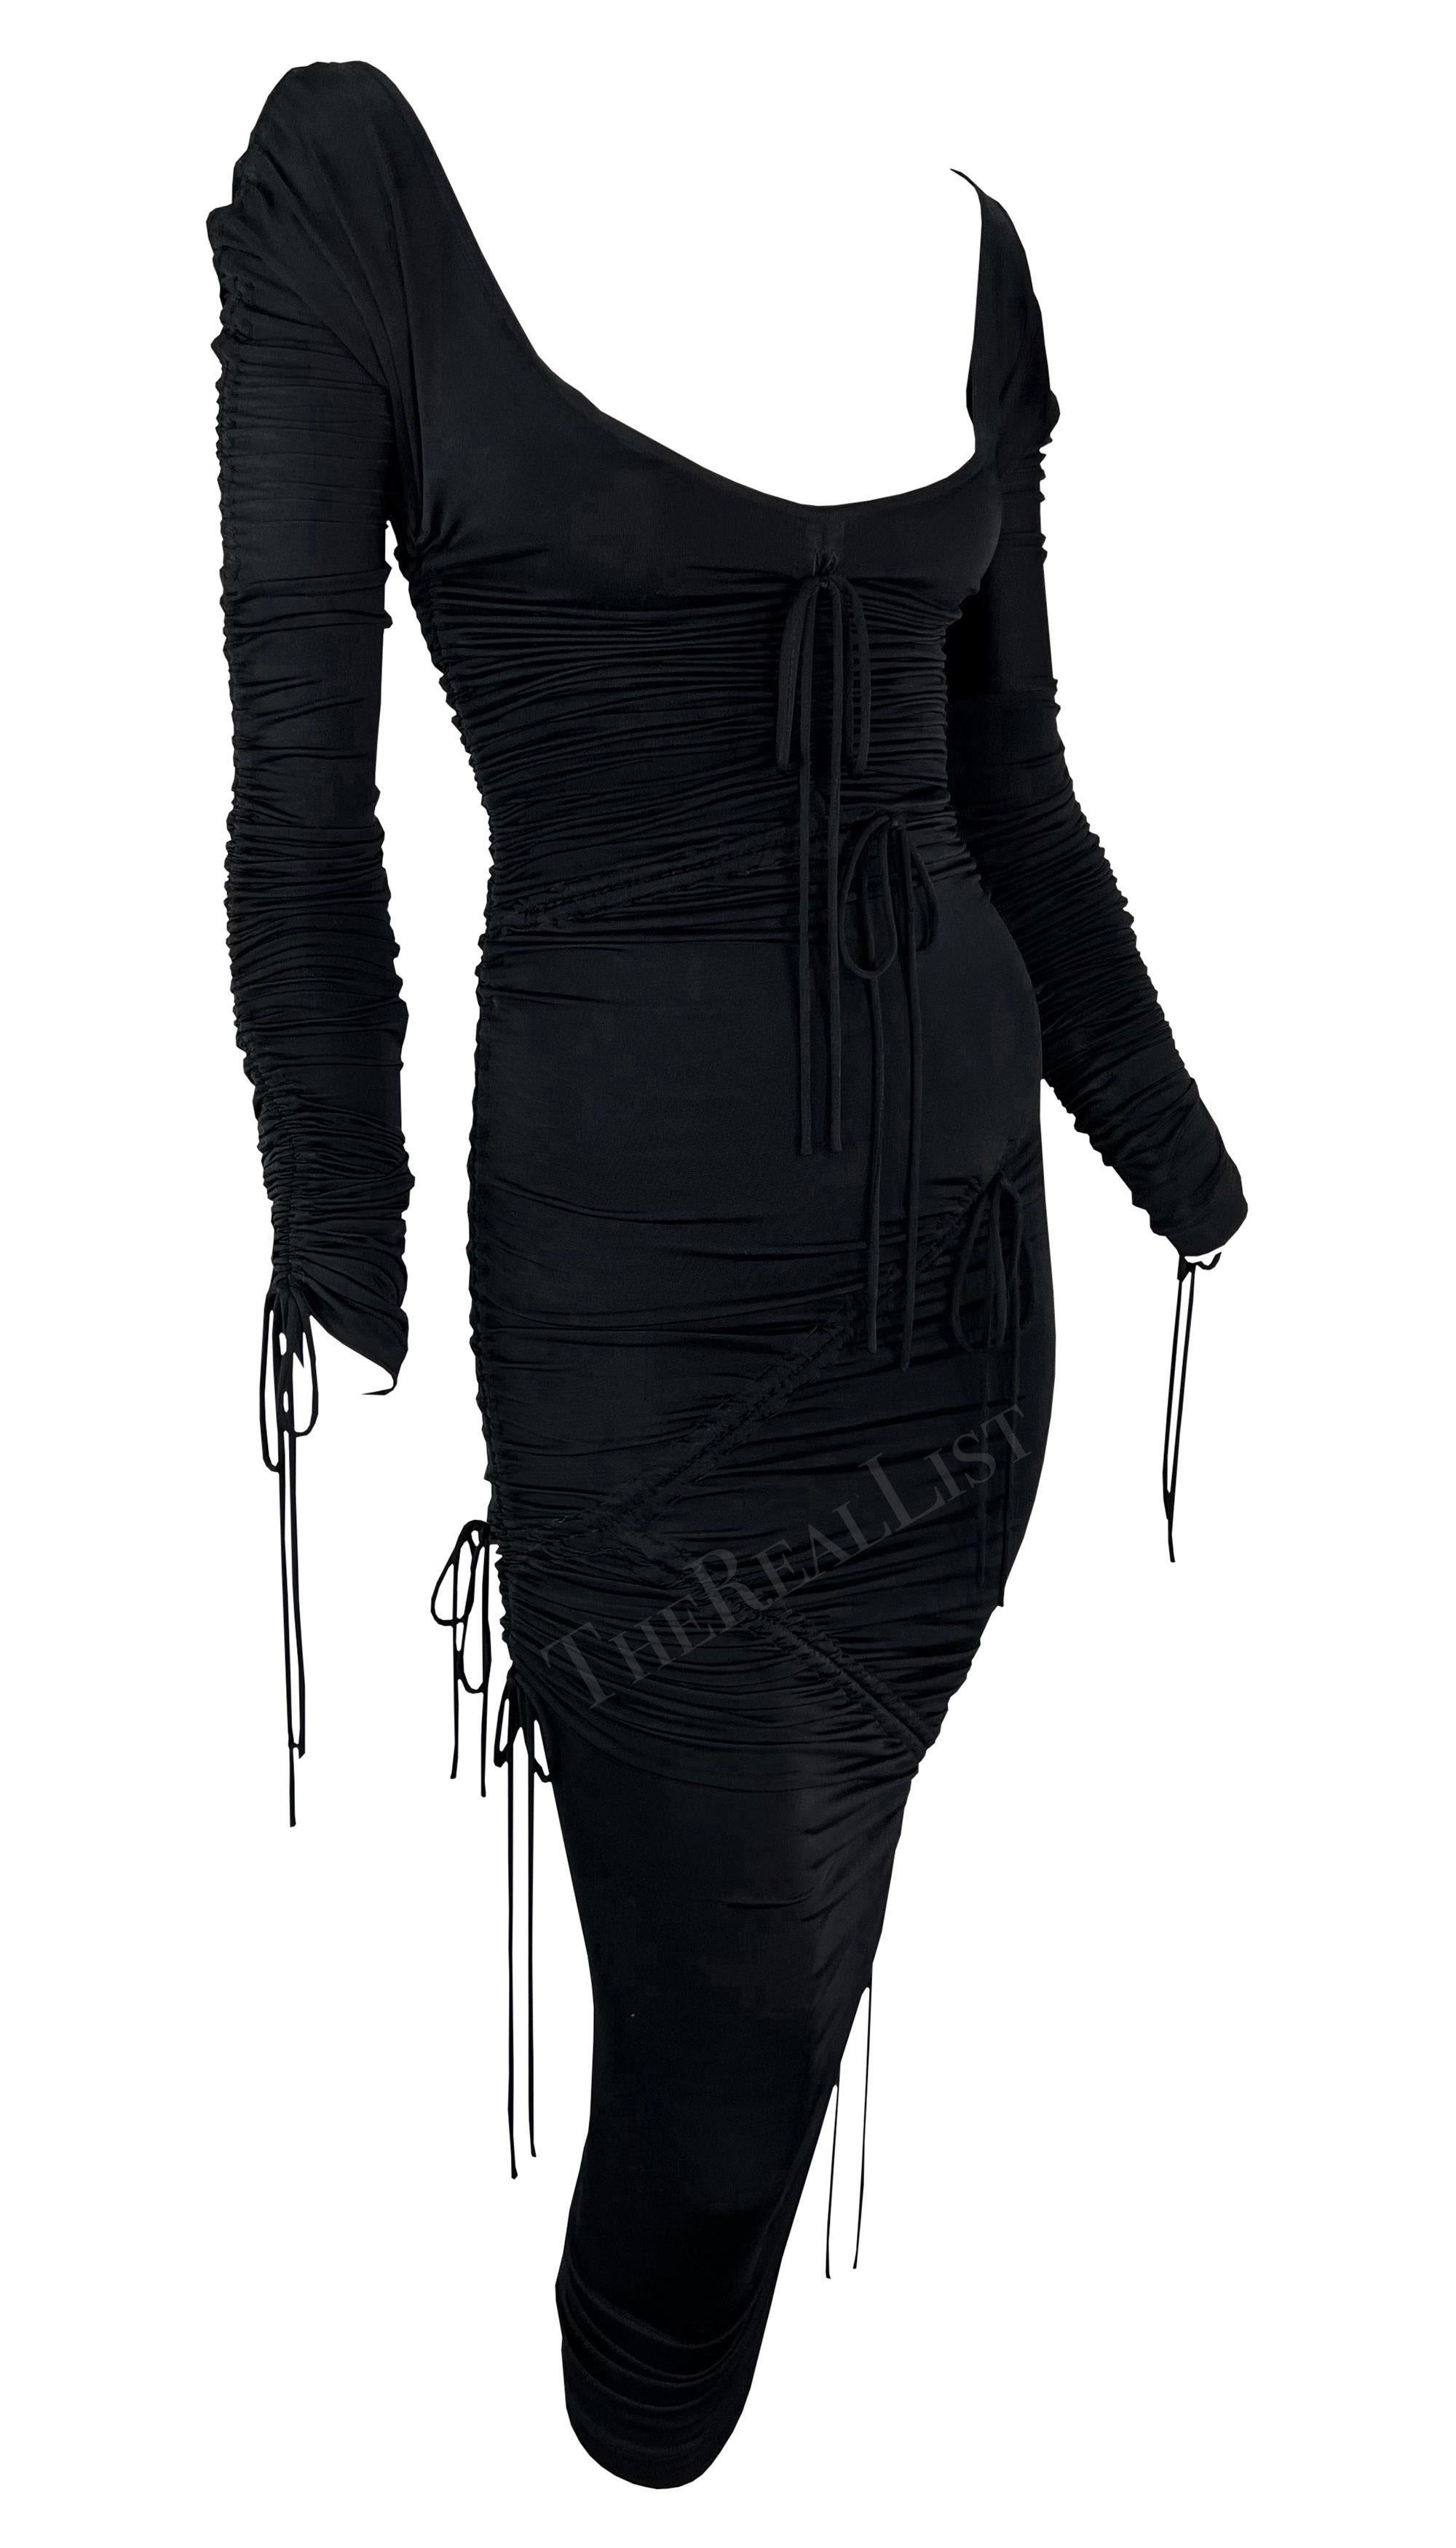 S/S 2003 Dolce & Gabbana Runway 'Sex & Love' Black Drawstring Bodycon Dress For Sale 8